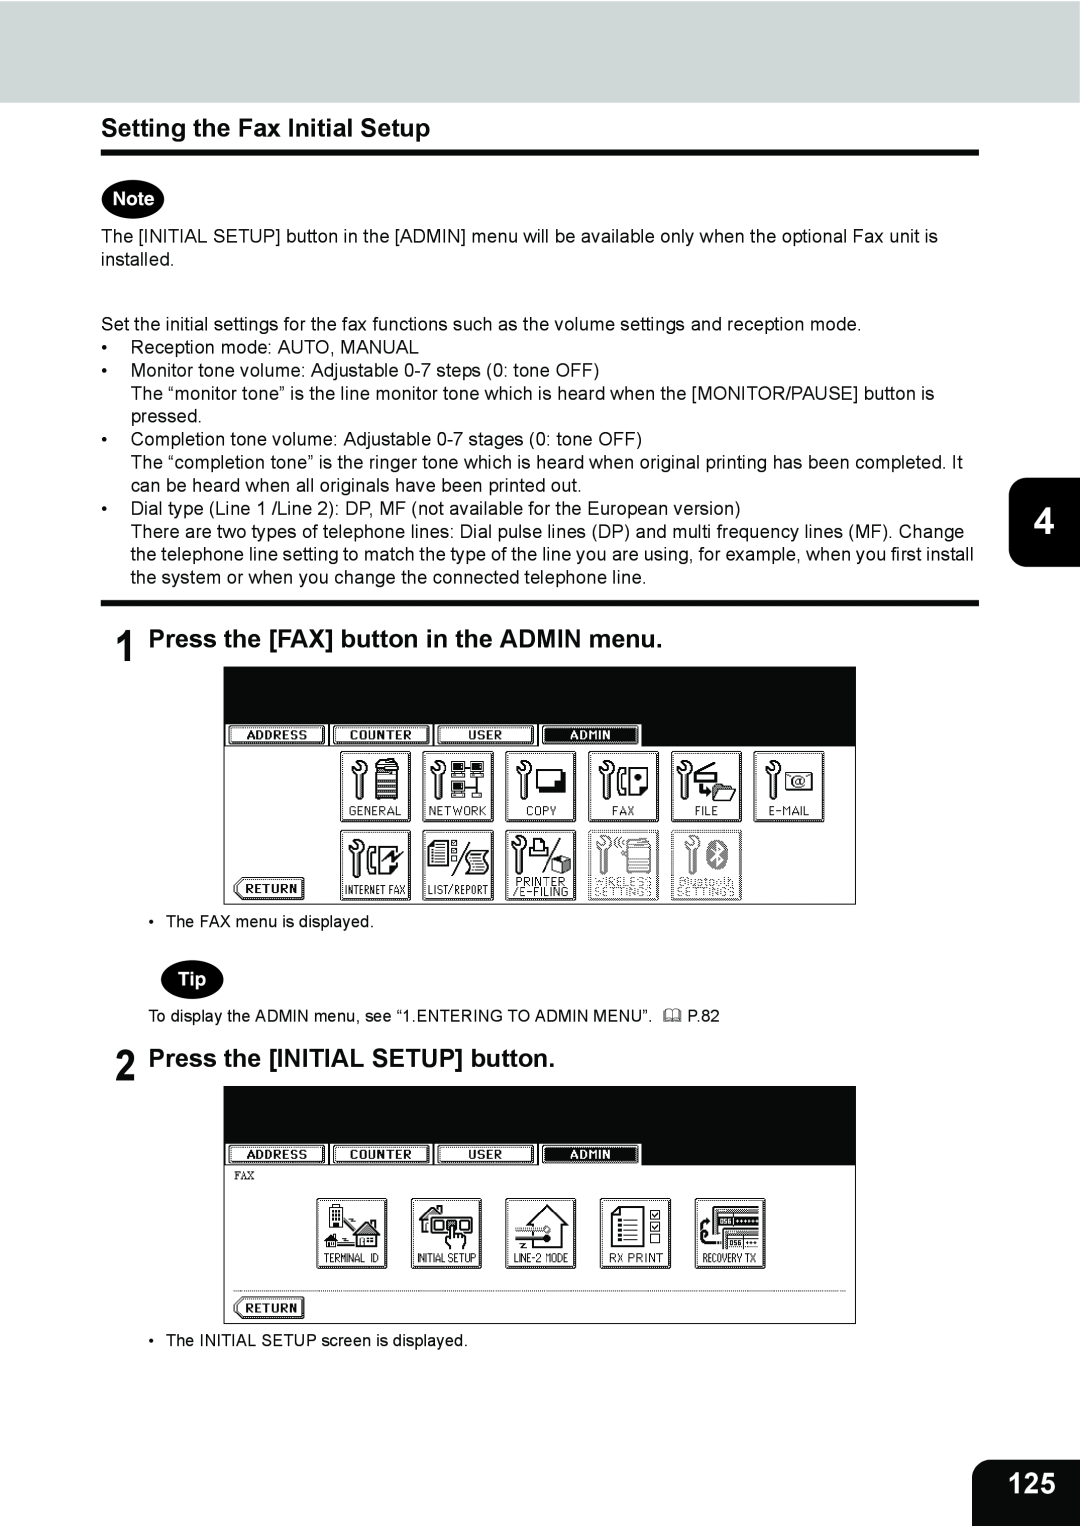 Toshiba 282, 232 Setting the Fax Initial Setup, Press the INITIAL SETUP button, Press the FAX button in the ADMIN menu 